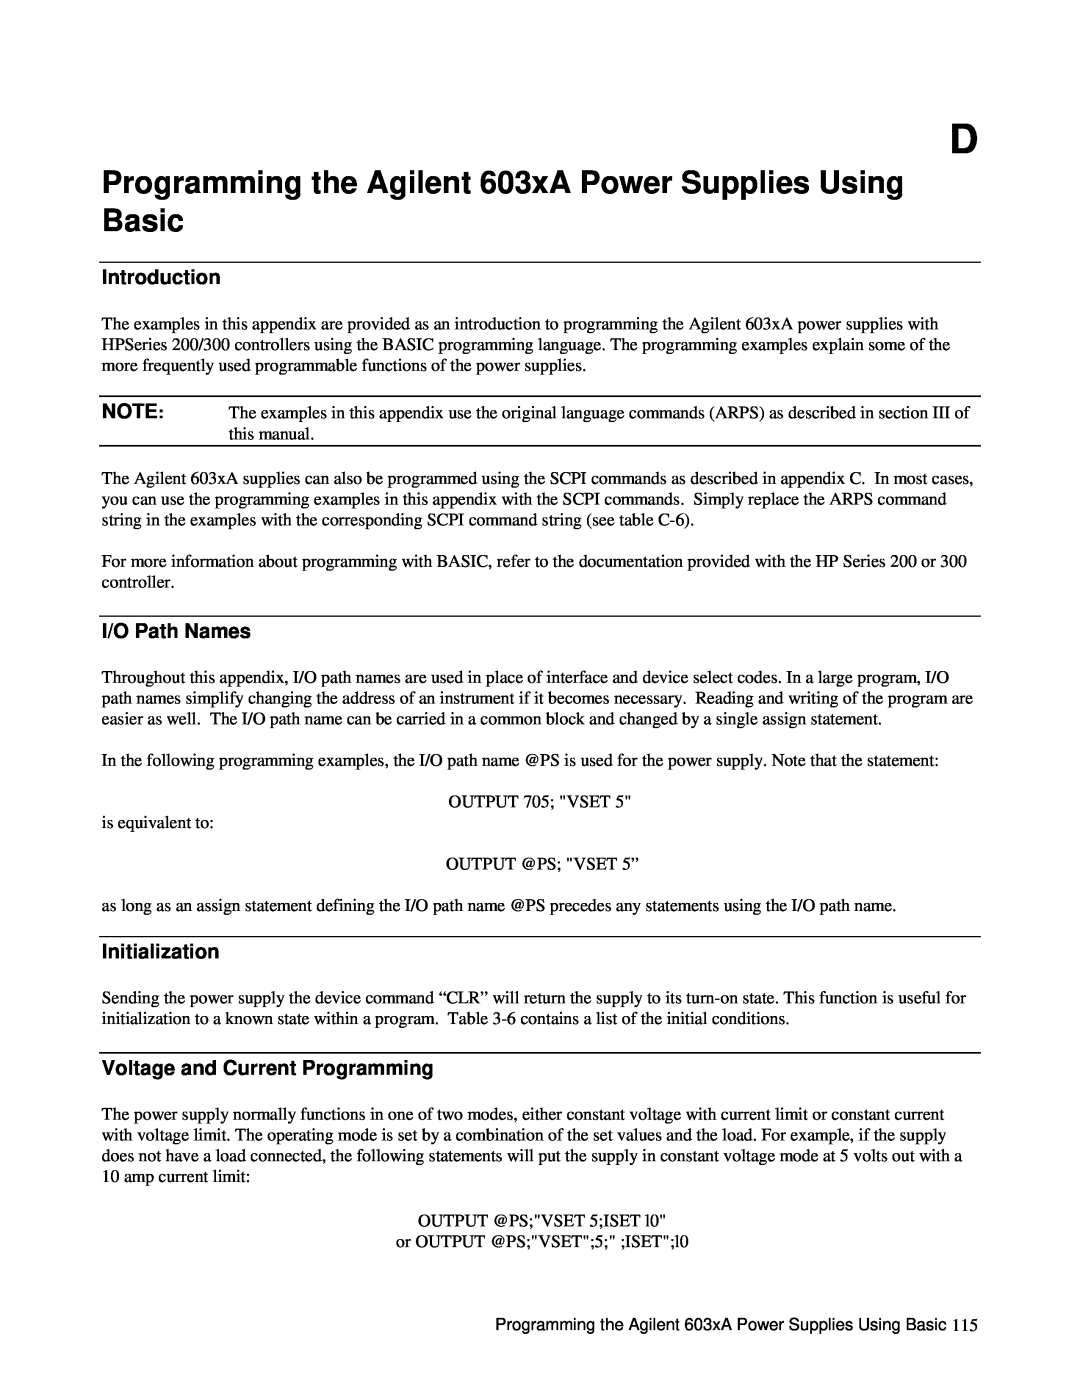 Agilent Technologies Serials 3038A-00101 and above Agilent 6038A Programming the Agilent 603xA Power Supplies Using Basic 